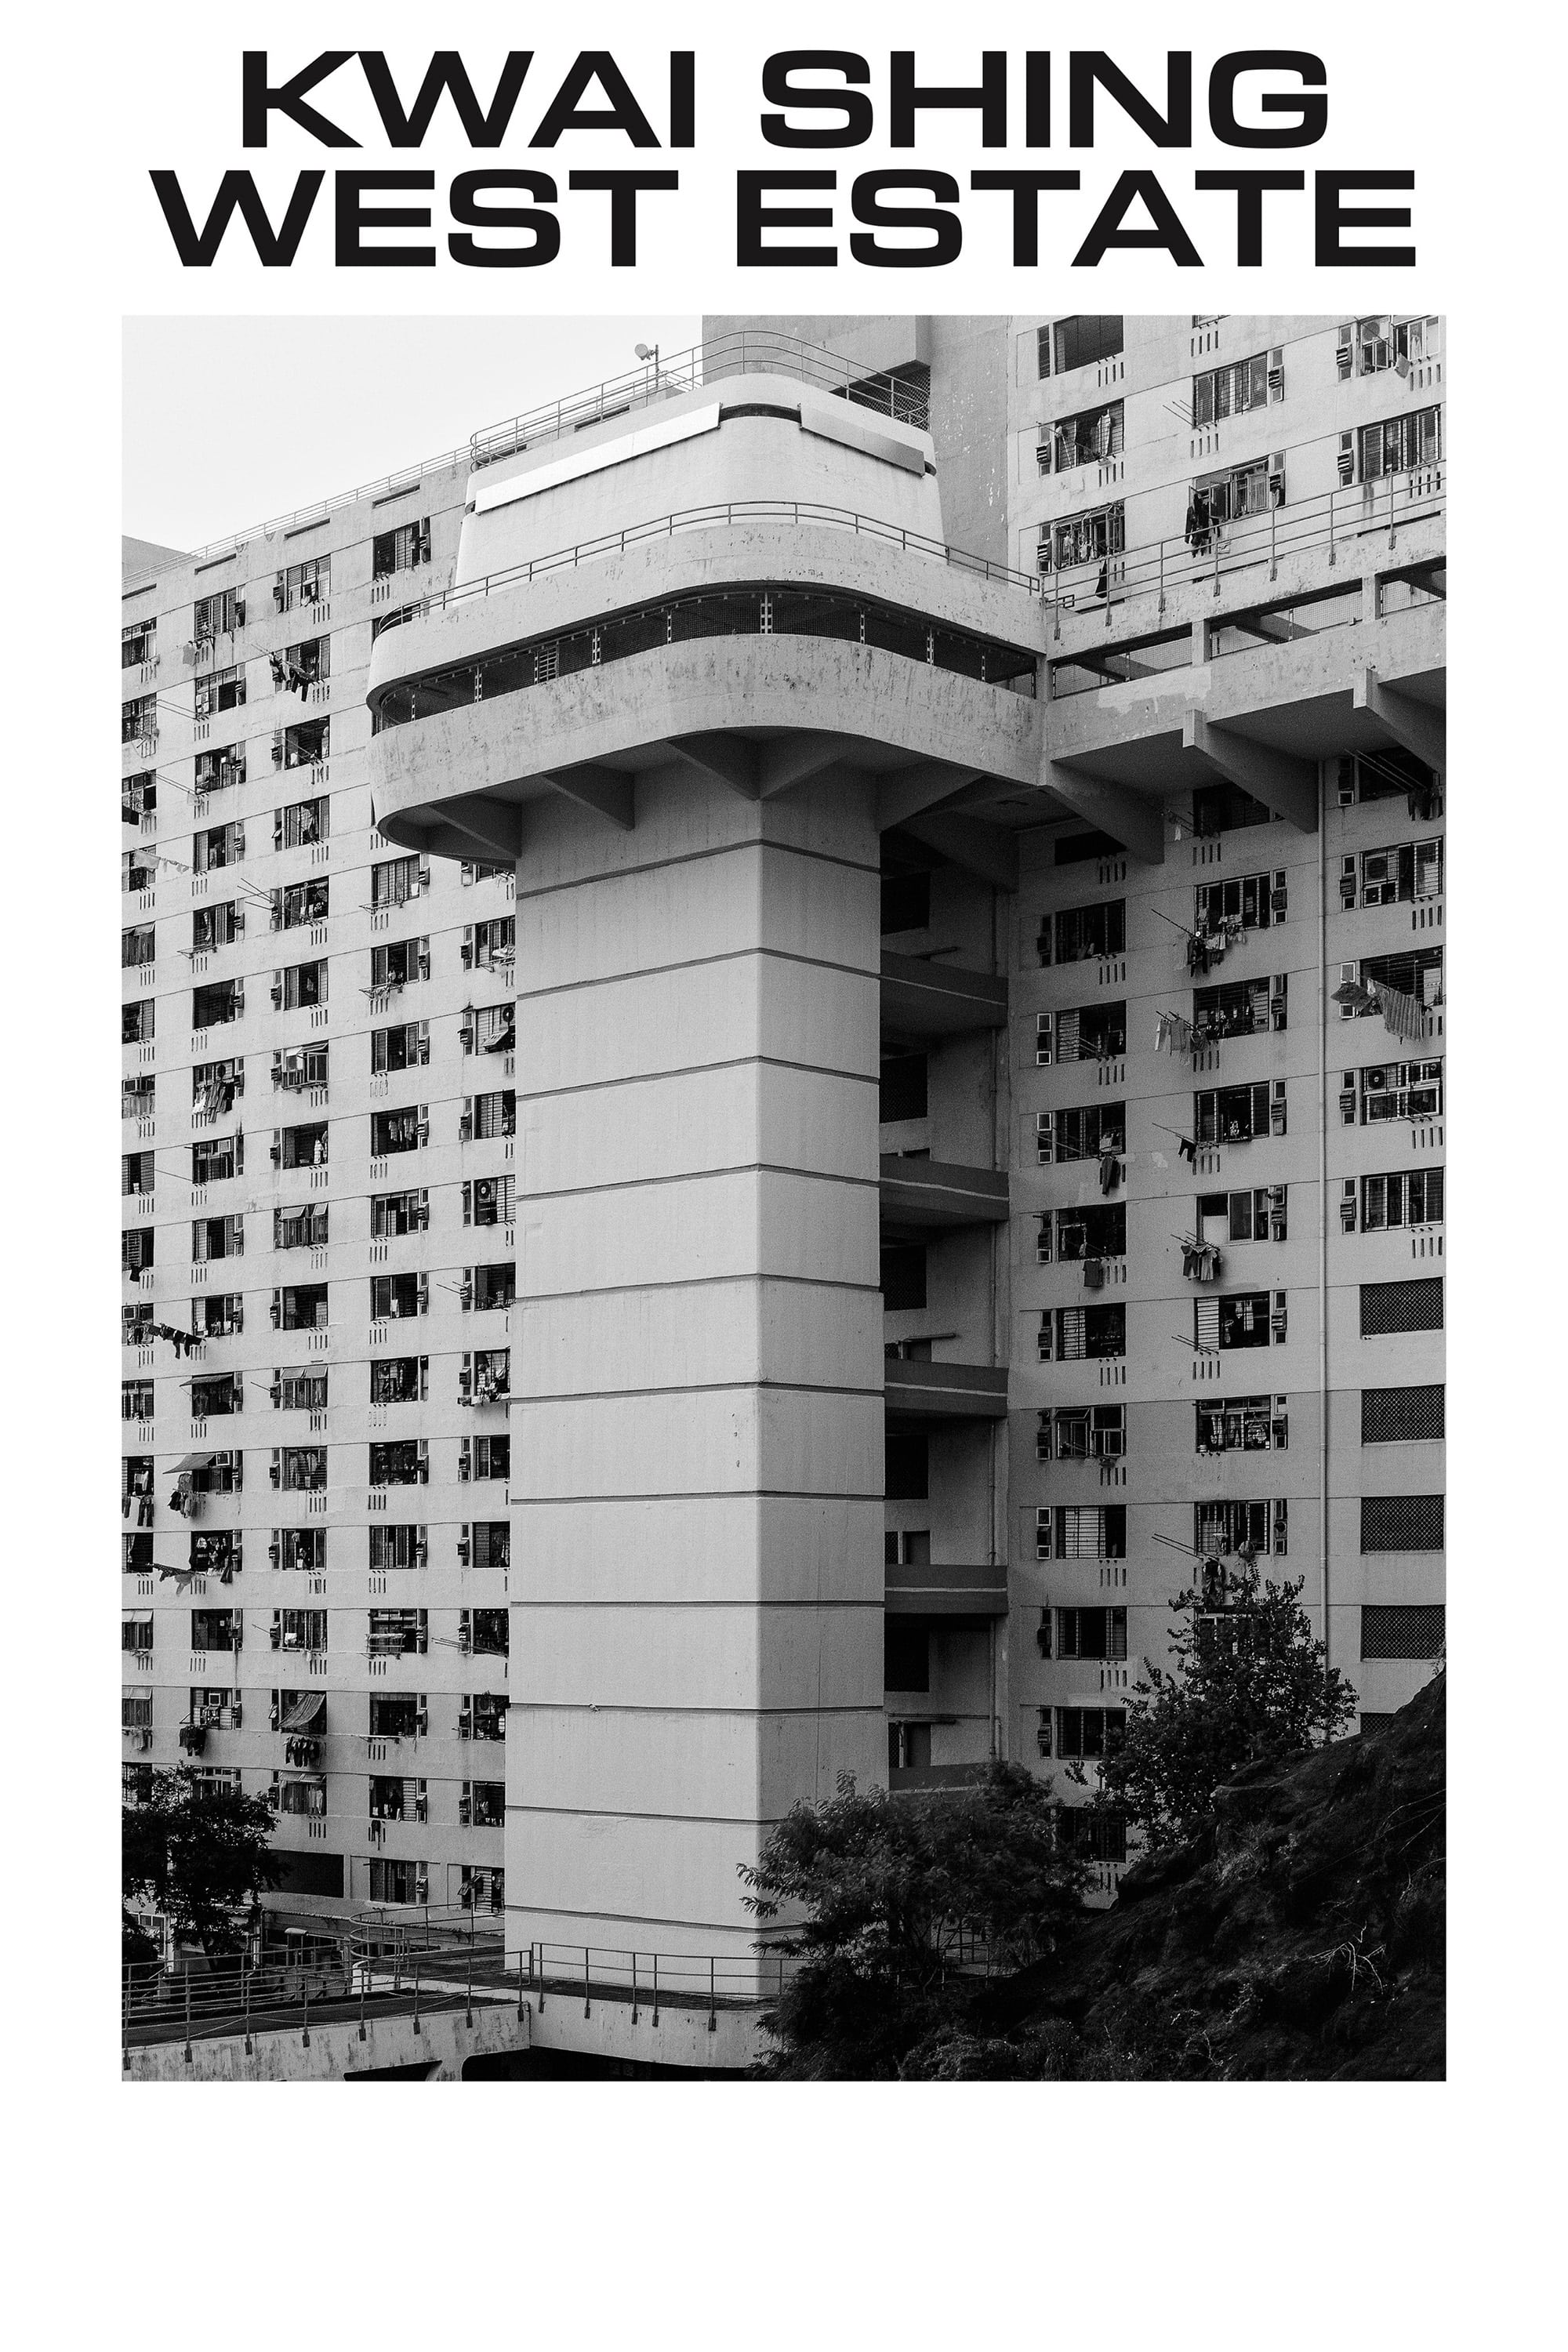 Kwai Shing West Estate